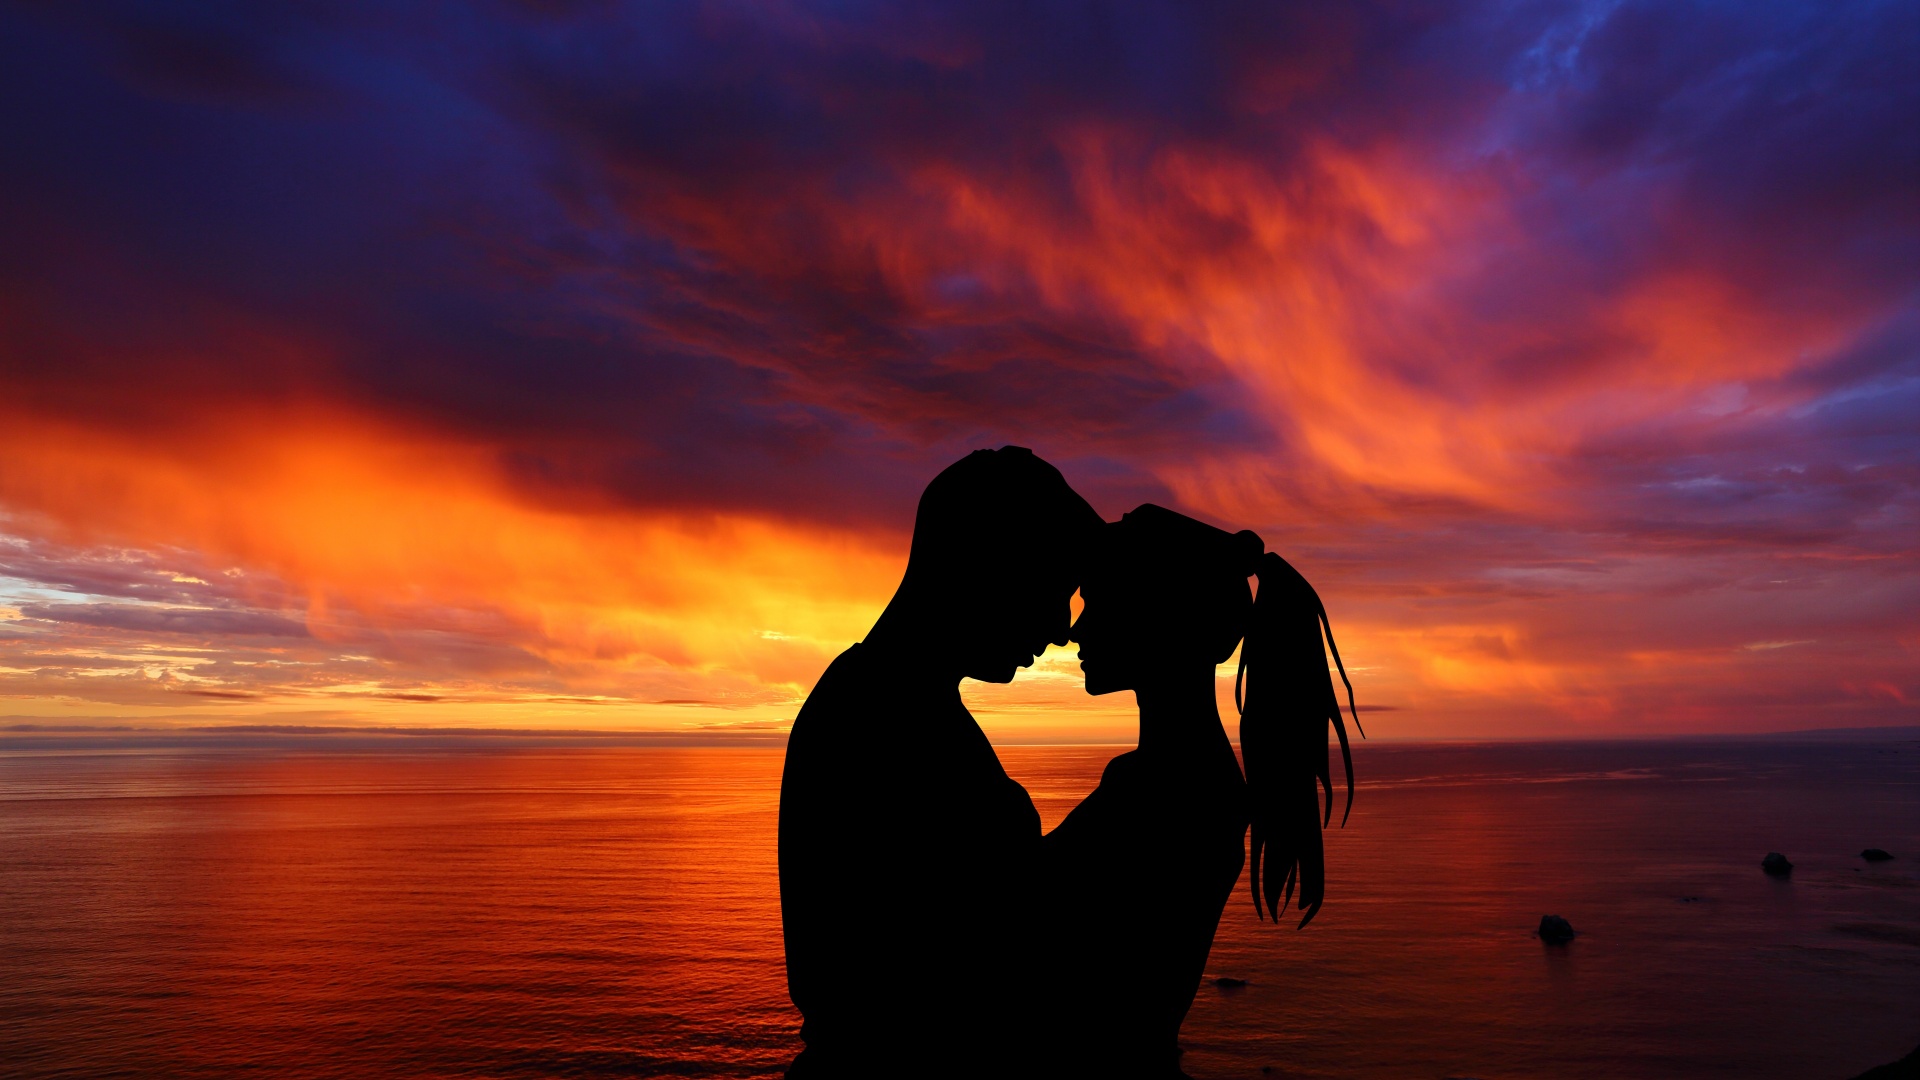 Couple Wallpaper 4k Romantic Silhouette Sunset